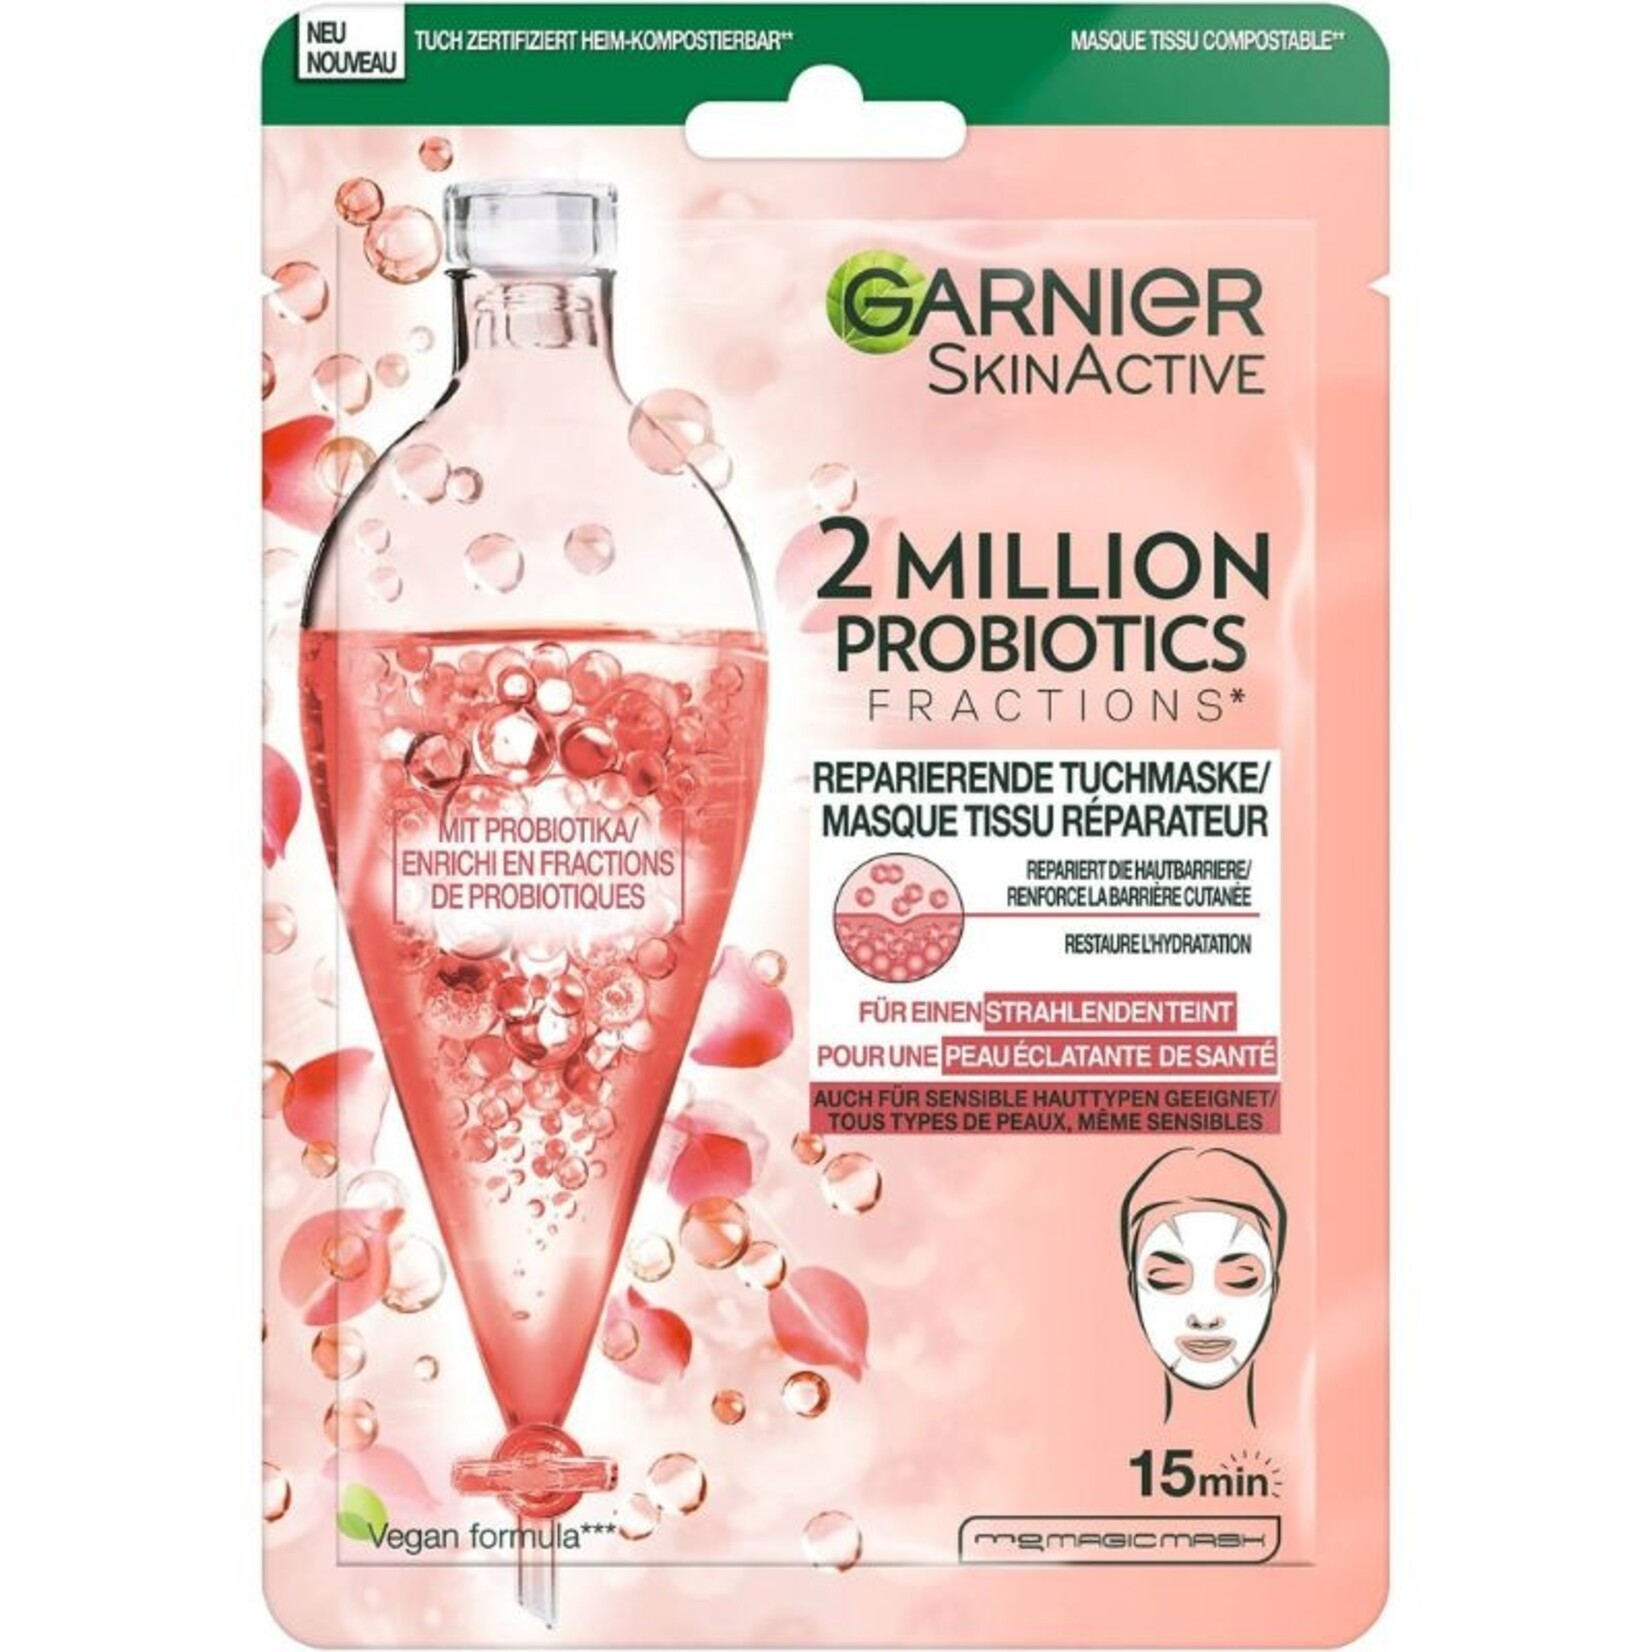 Garnier SkinActive - 2 Million Probiotics